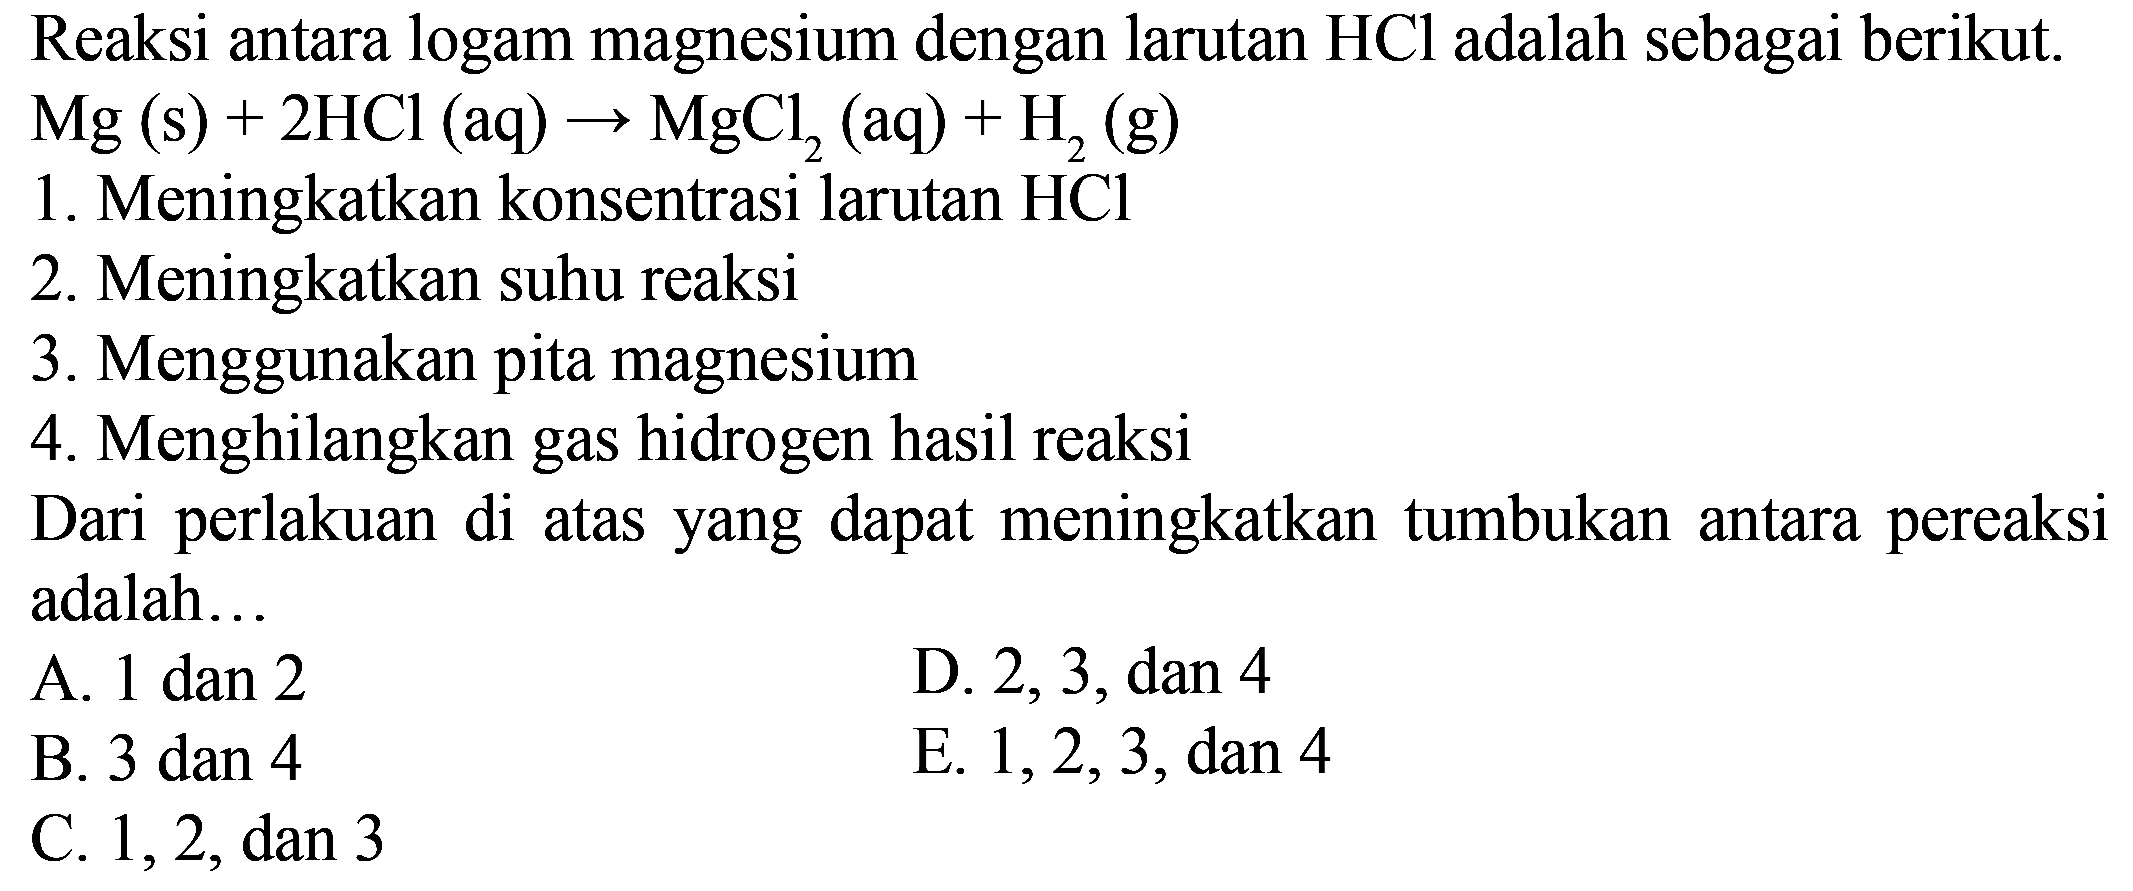 Reaksi antara logam magnesium dengan larutan  HCl  adalah sebagai berikut.  Mg(s)+2HCl(aq) -> MgCl2(aq)+H2(g)  1. Meningkatkan konsentrasi larutan  HCl  2. Meningkatkan suhu reaksi 3. Menggunakan pita magnesium 4. Menghilangkan gas hidrogen hasil reaksi Dari perlakuan di atas yang dapat meningkatkan tumbukan antara pereaksi adalah...  